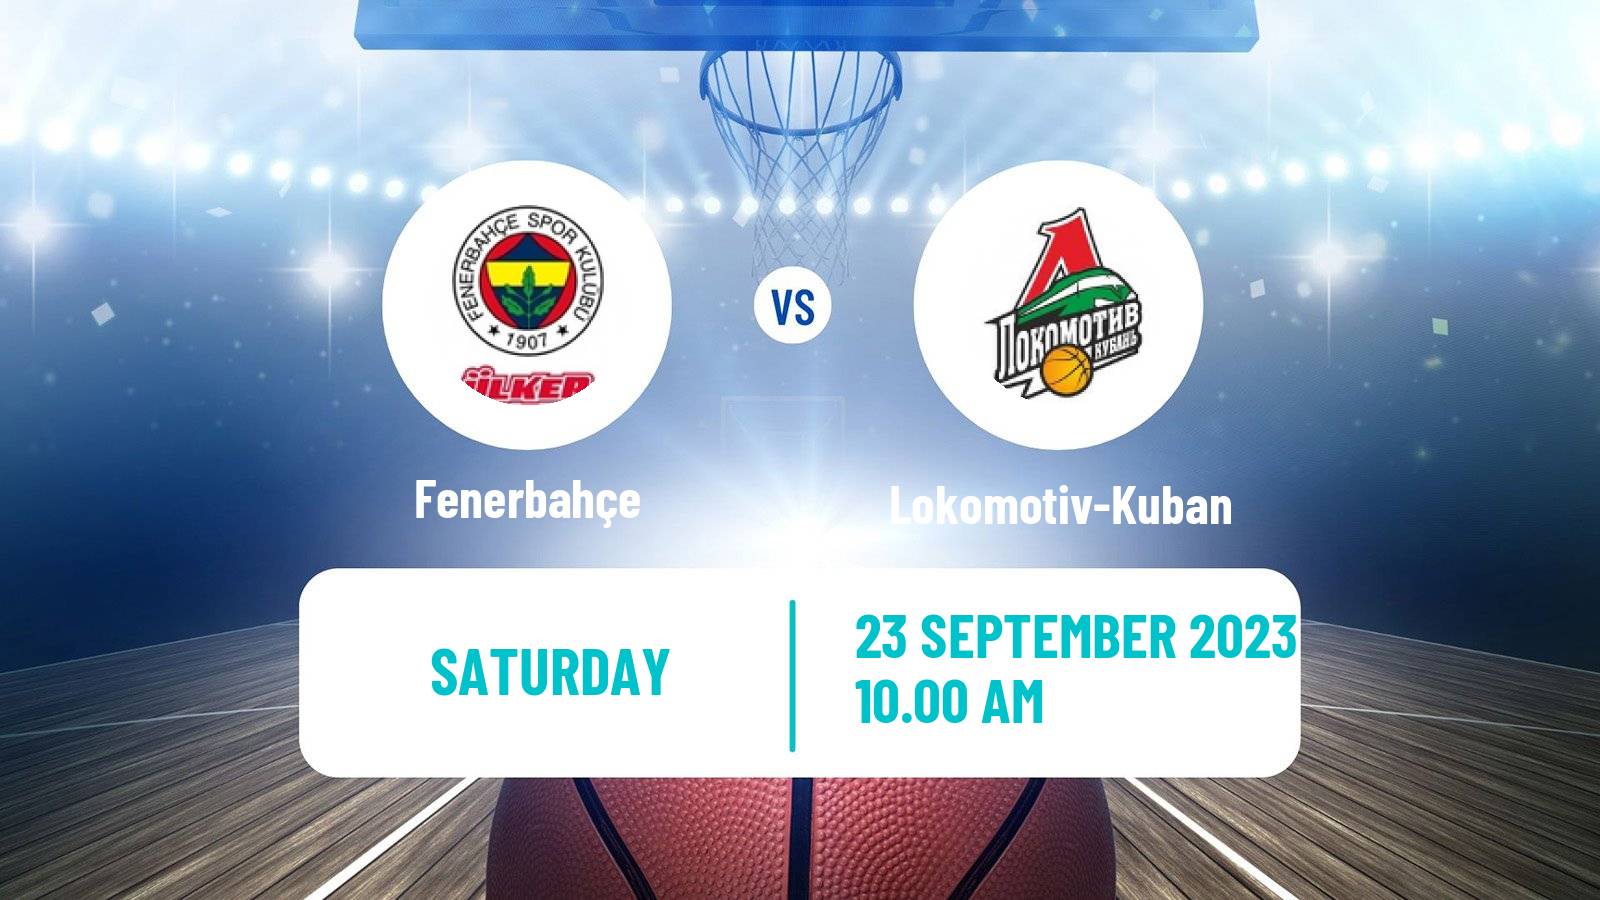 Basketball VTB Super Cup Fenerbahçe - Lokomotiv-Kuban